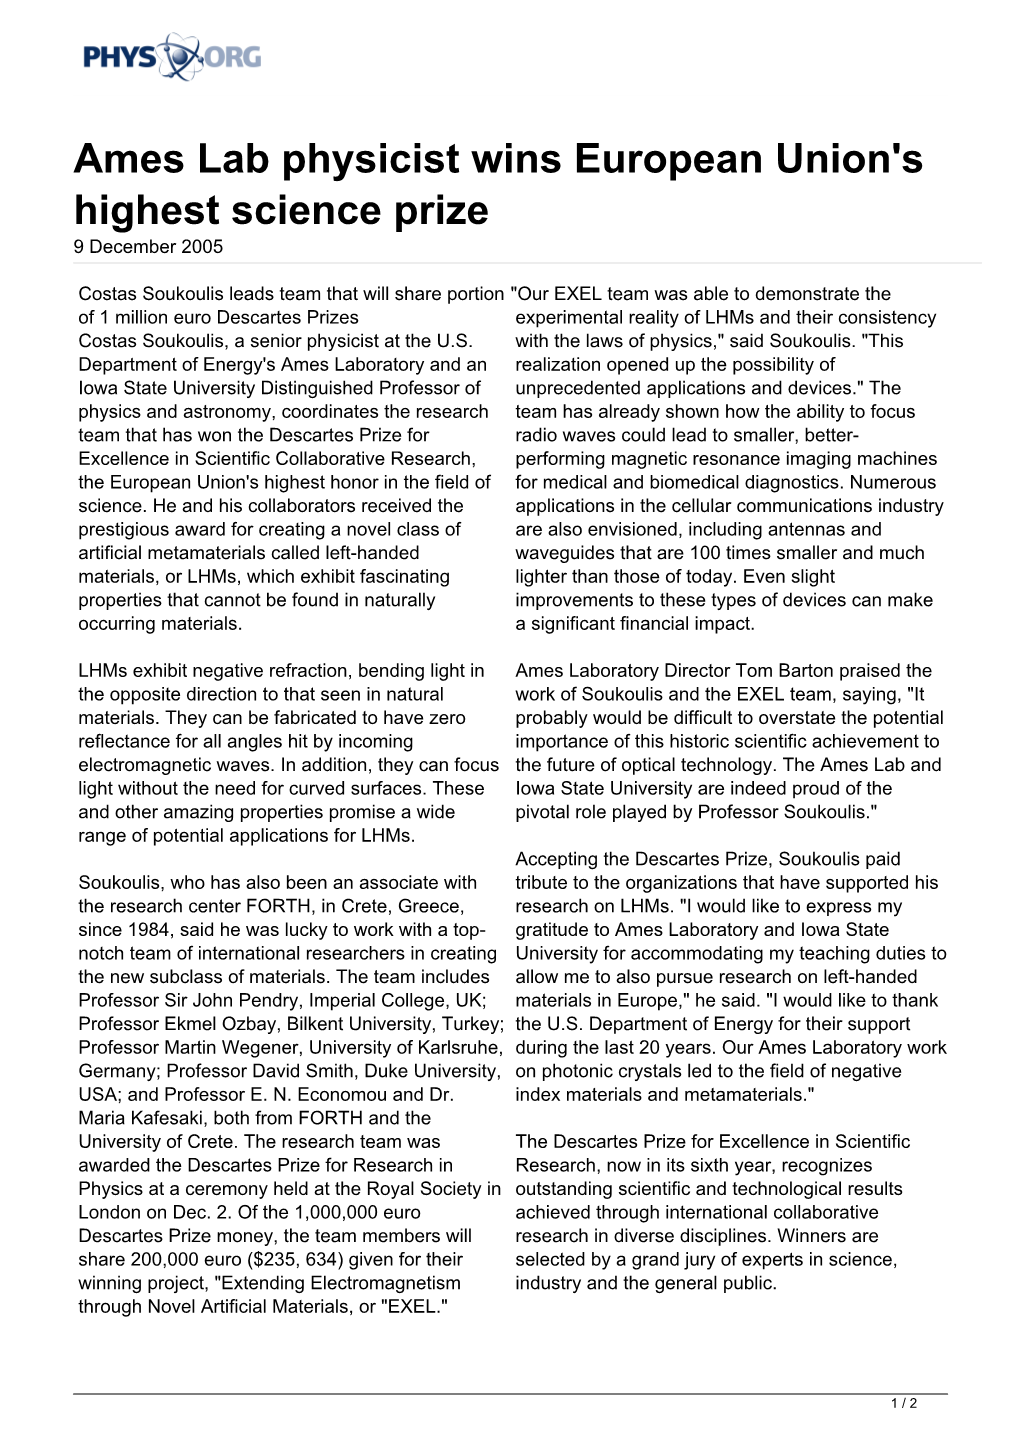 Ames Lab Physicist Wins European Union's Highest Science Prize 9 December 2005